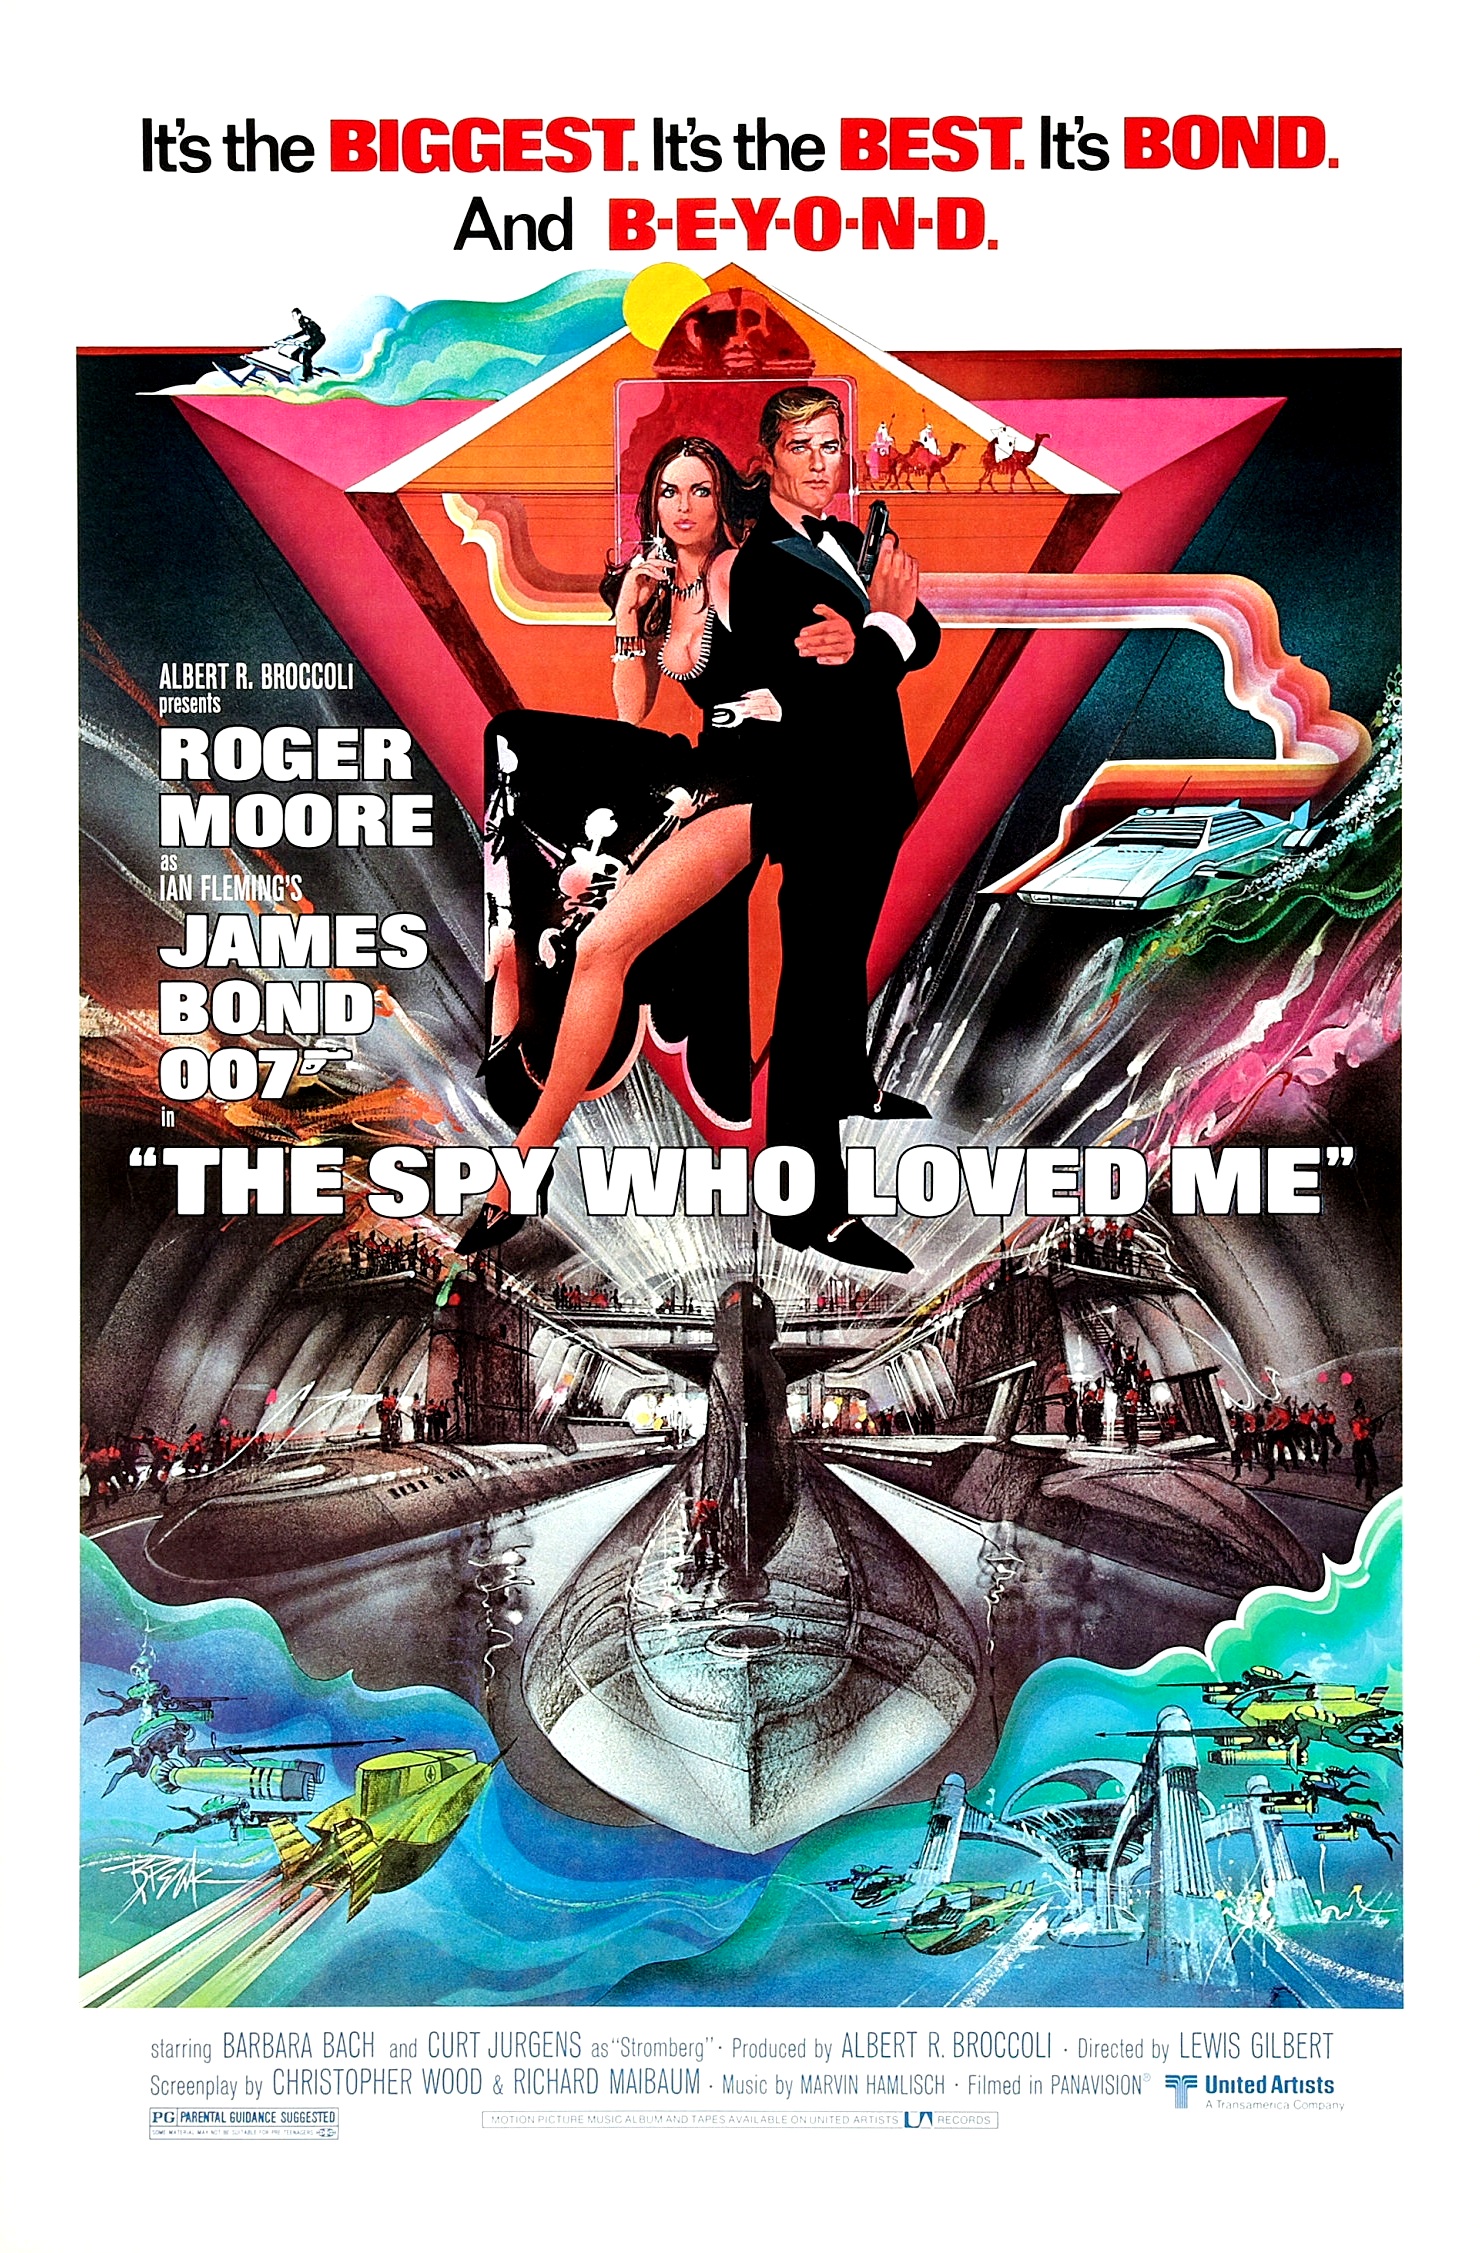 Nonton film The Spy Who Loved Me (james Bond 007) layarkaca21 indoxx1 ganool online streaming terbaru